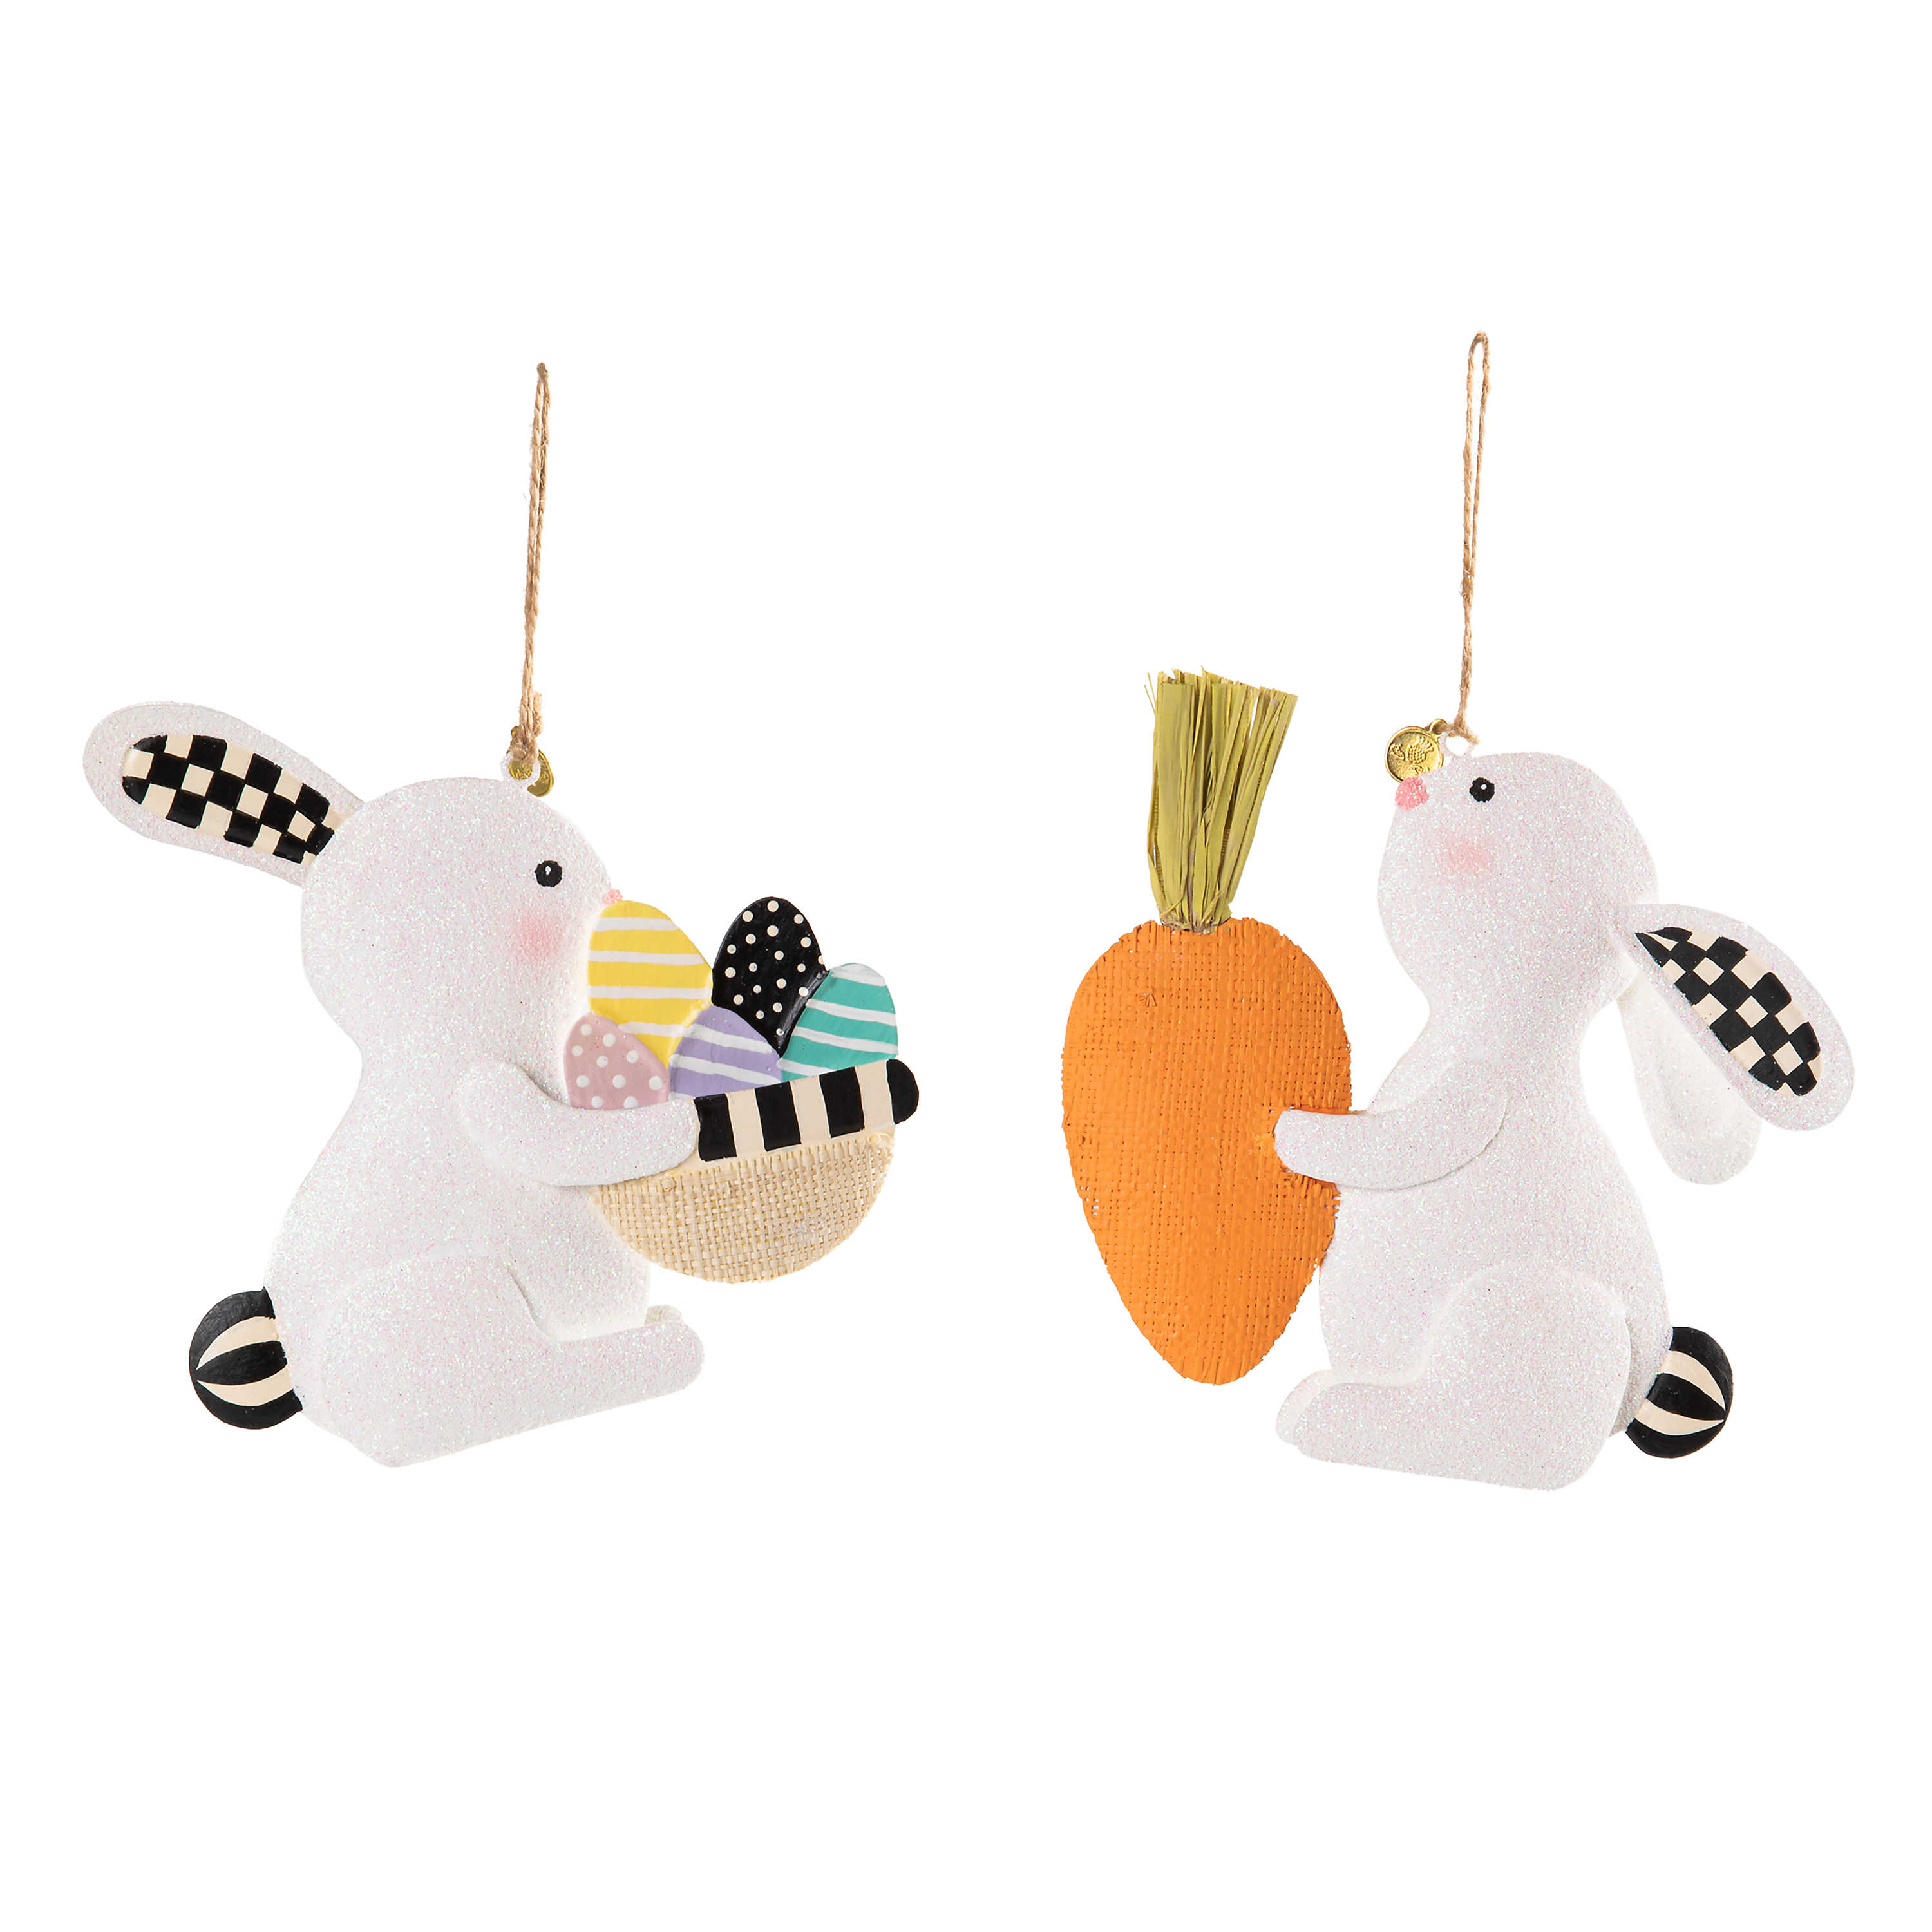 Bunny Ornaments - Set of 2 mackenzie-childs Panama 0